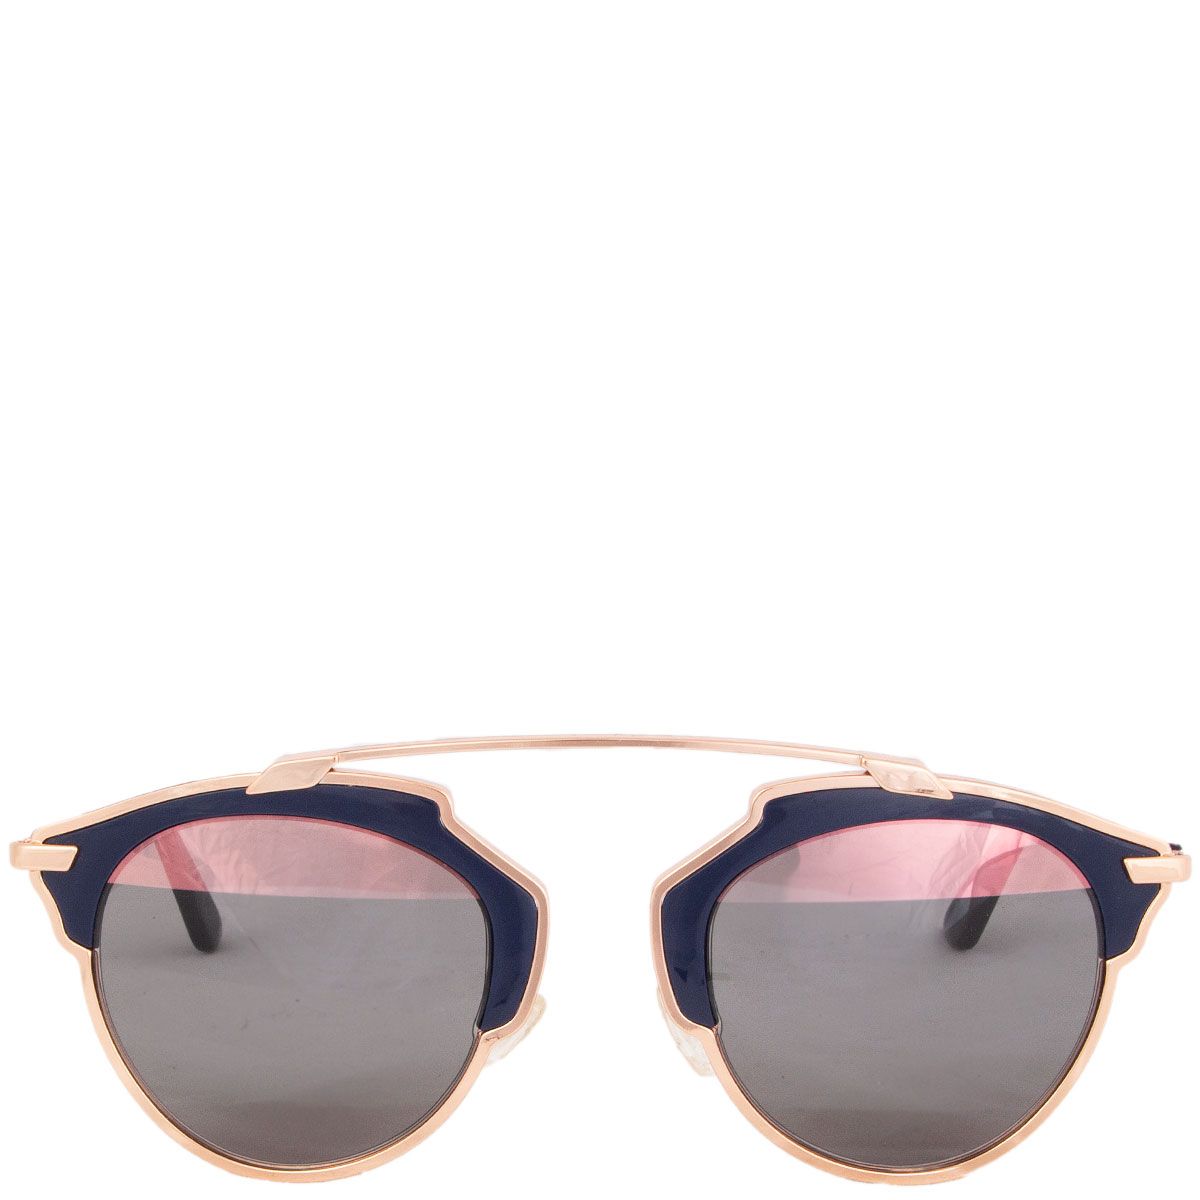 Christian Dior So Real Sunglasses Rose Gold/Blue